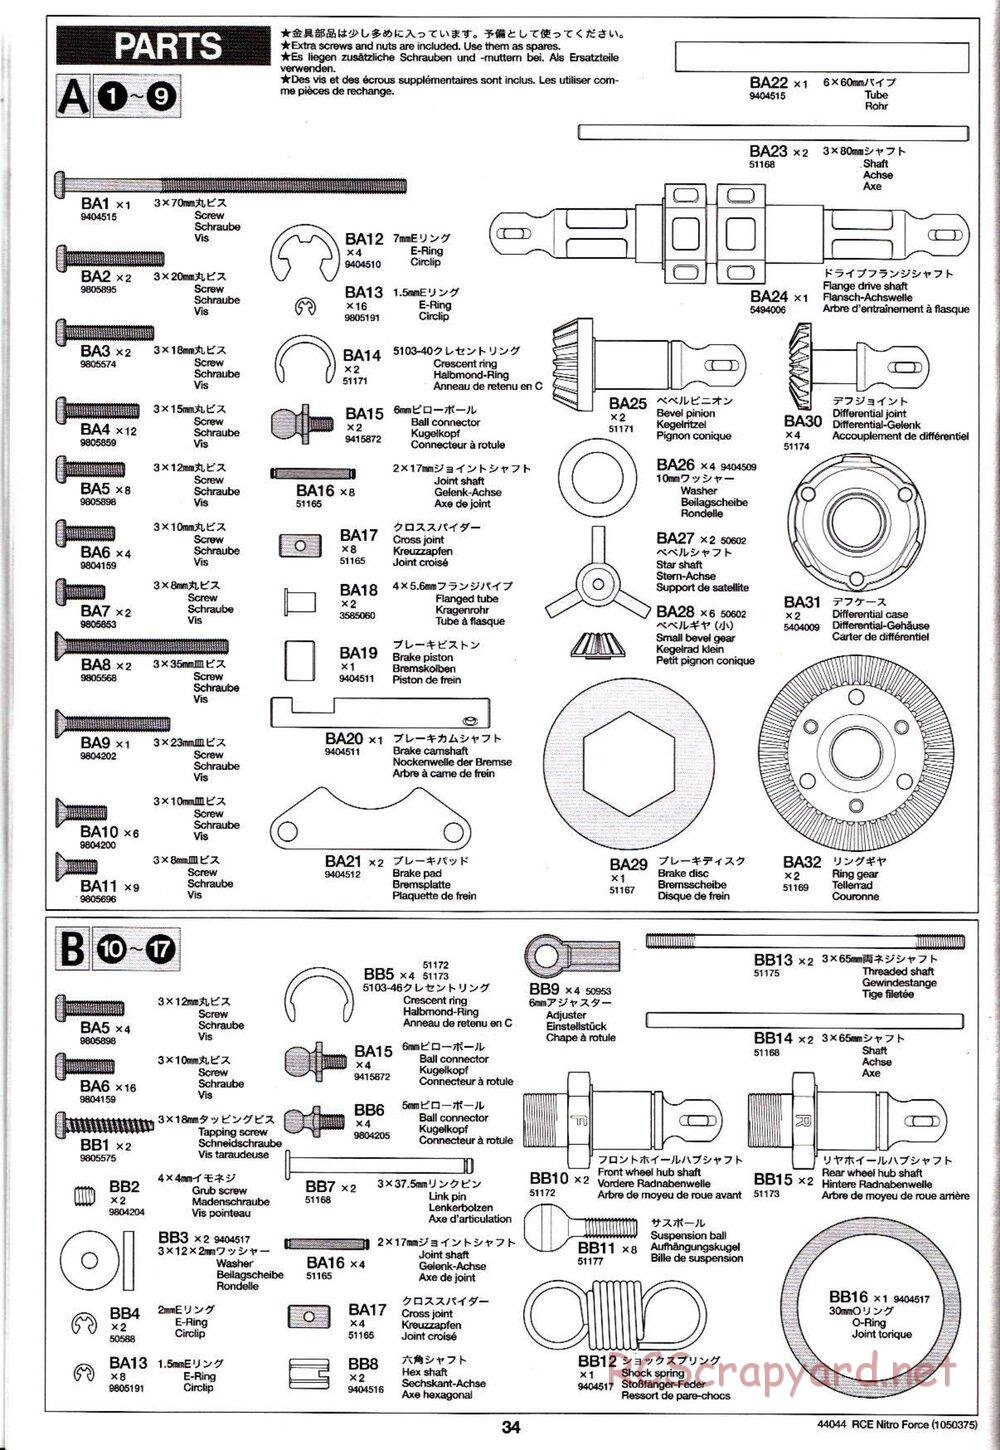 Tamiya - Nitro Force - NDF-01 Chassis - Manual - Page 34